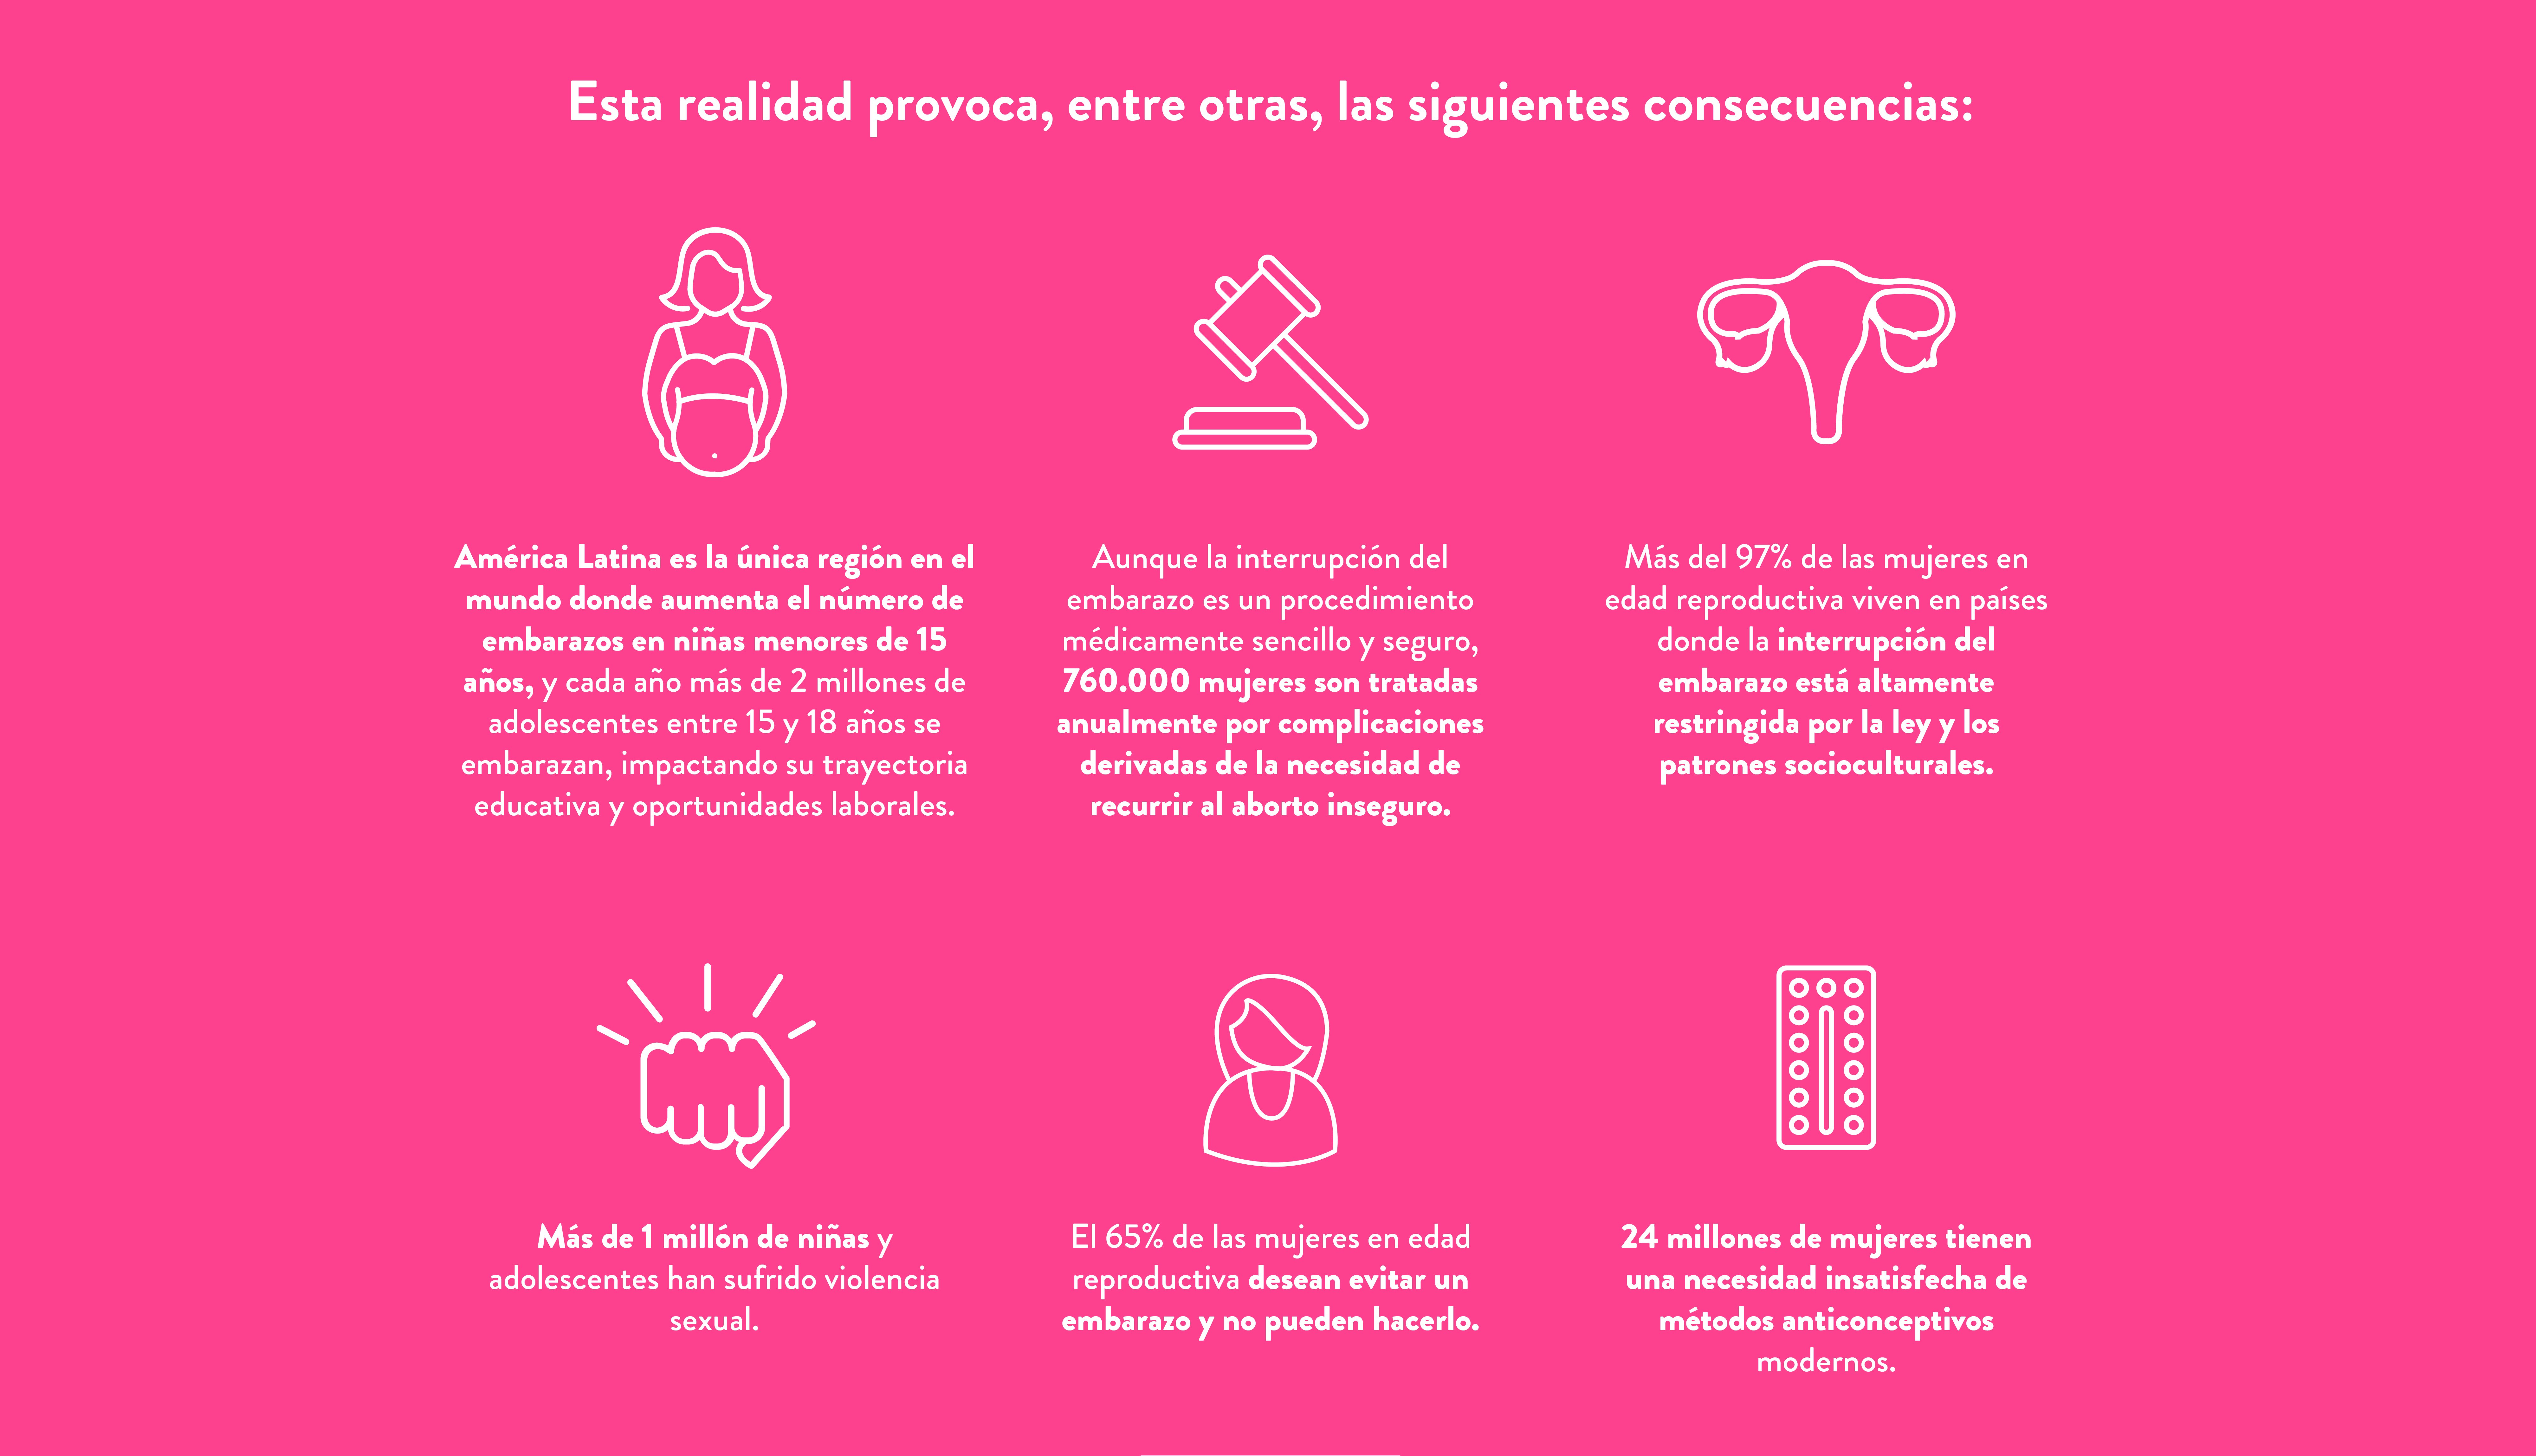 Infographic on Latin America Women's reproductive health